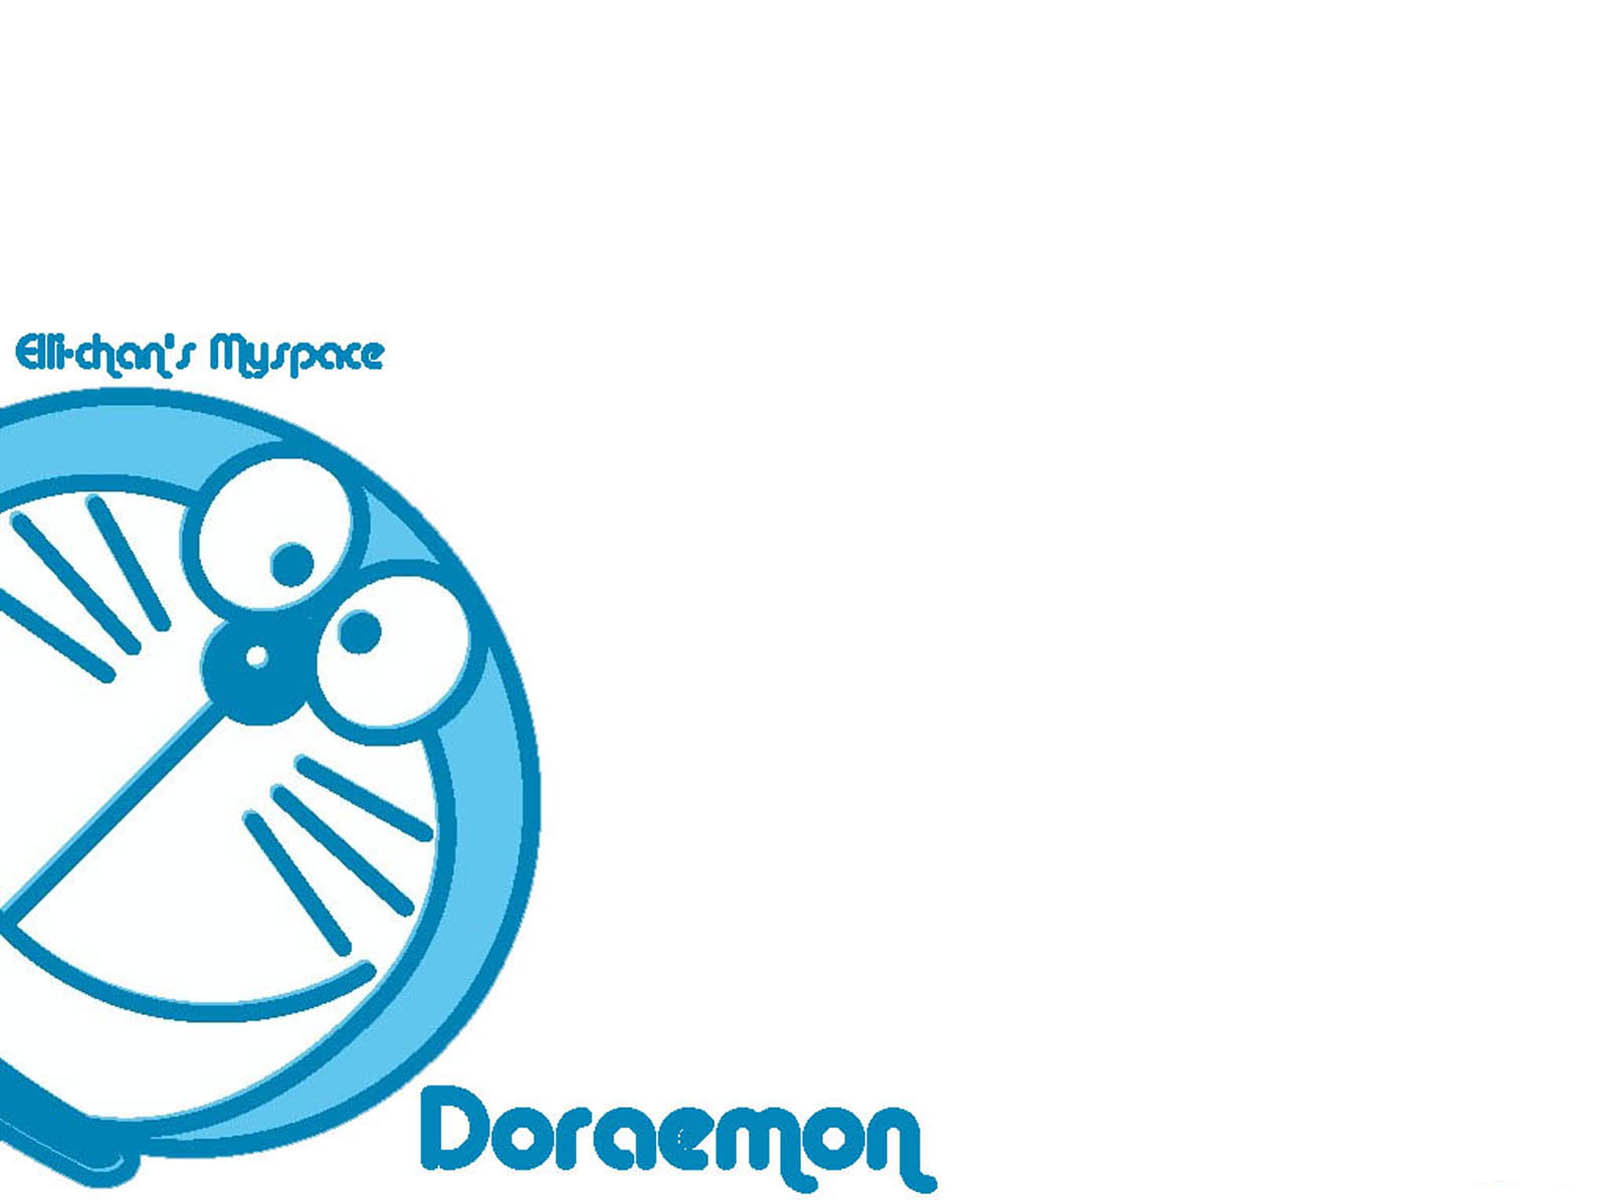 Free Download Doraemon Wallpaper Android Hd 6149 Wallpaper Cool Walldiskpapercom 1600x10 For Your Desktop Mobile Tablet Explore 50 Doraemon Wallpaper For Android Best Phone Wallpaper Android Wallpapers Hd Wallpapers For Phones